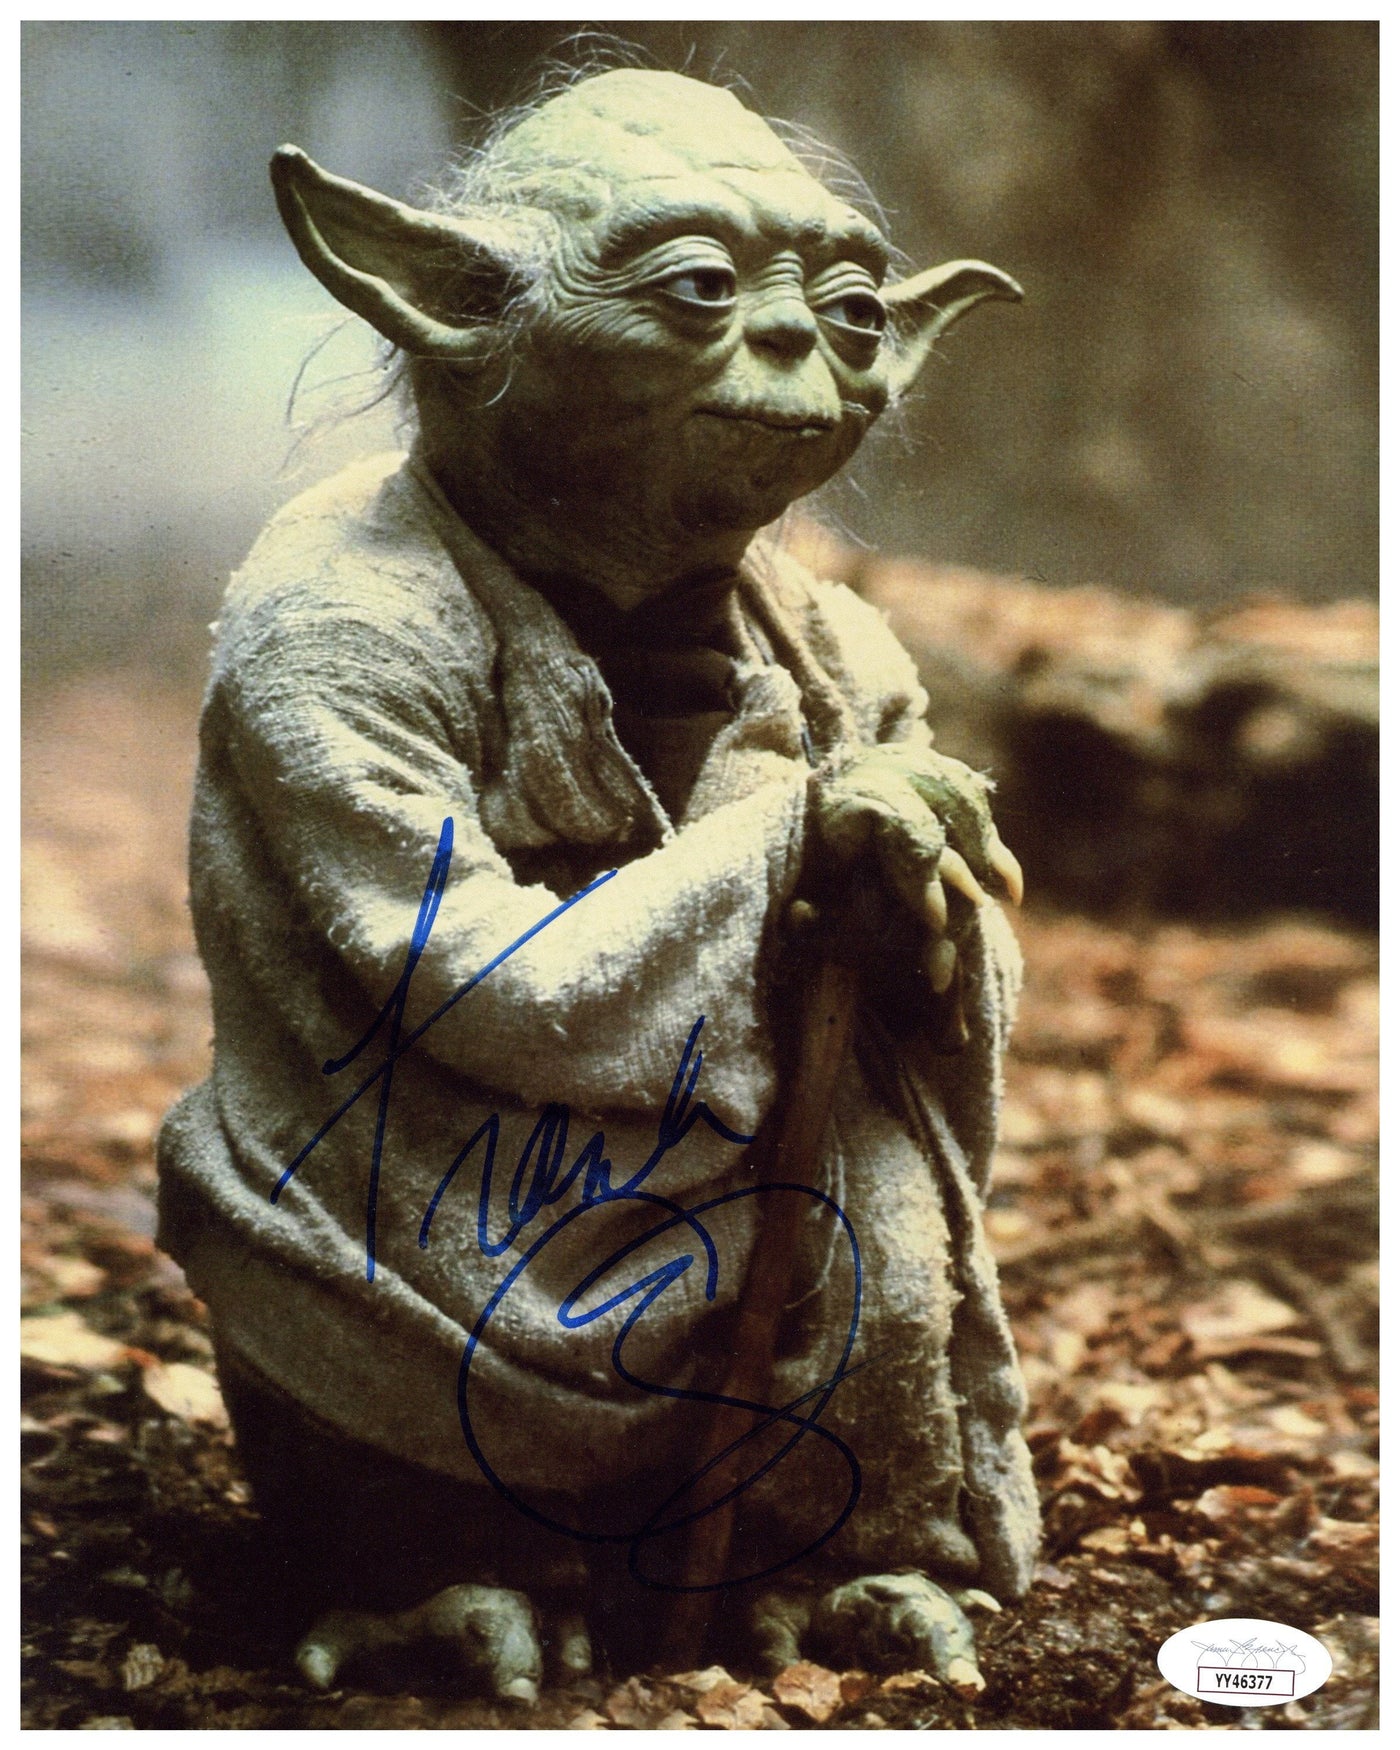 Frank Oz Signed 8x10 Photo Star Wars Yoda Authentic Autographed JSA COA